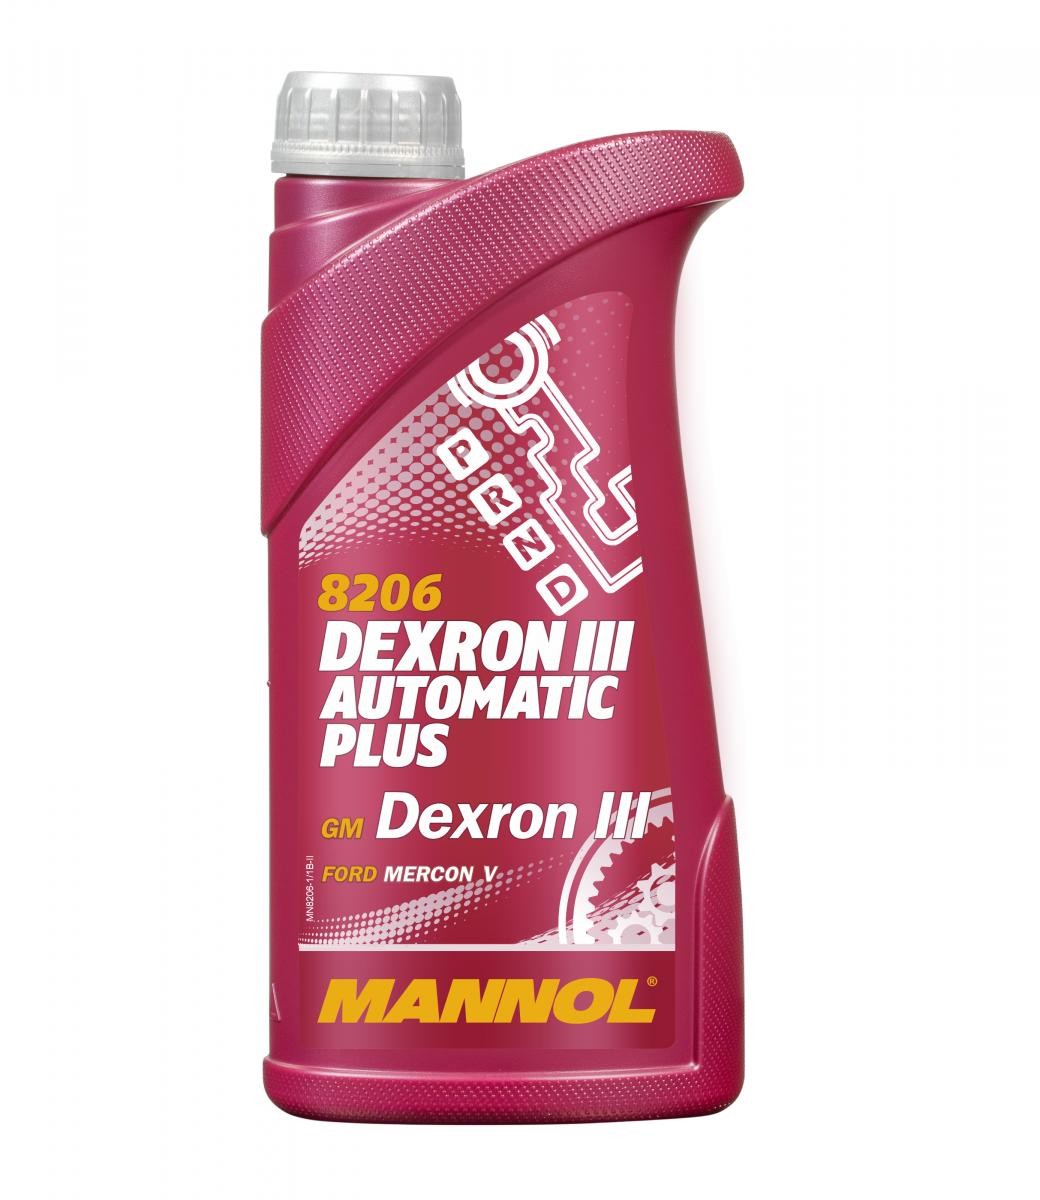 MANNOL Dexron III, Automatic Plus MN8206-1 Automatic transmission fluid ATF III, 1l, red